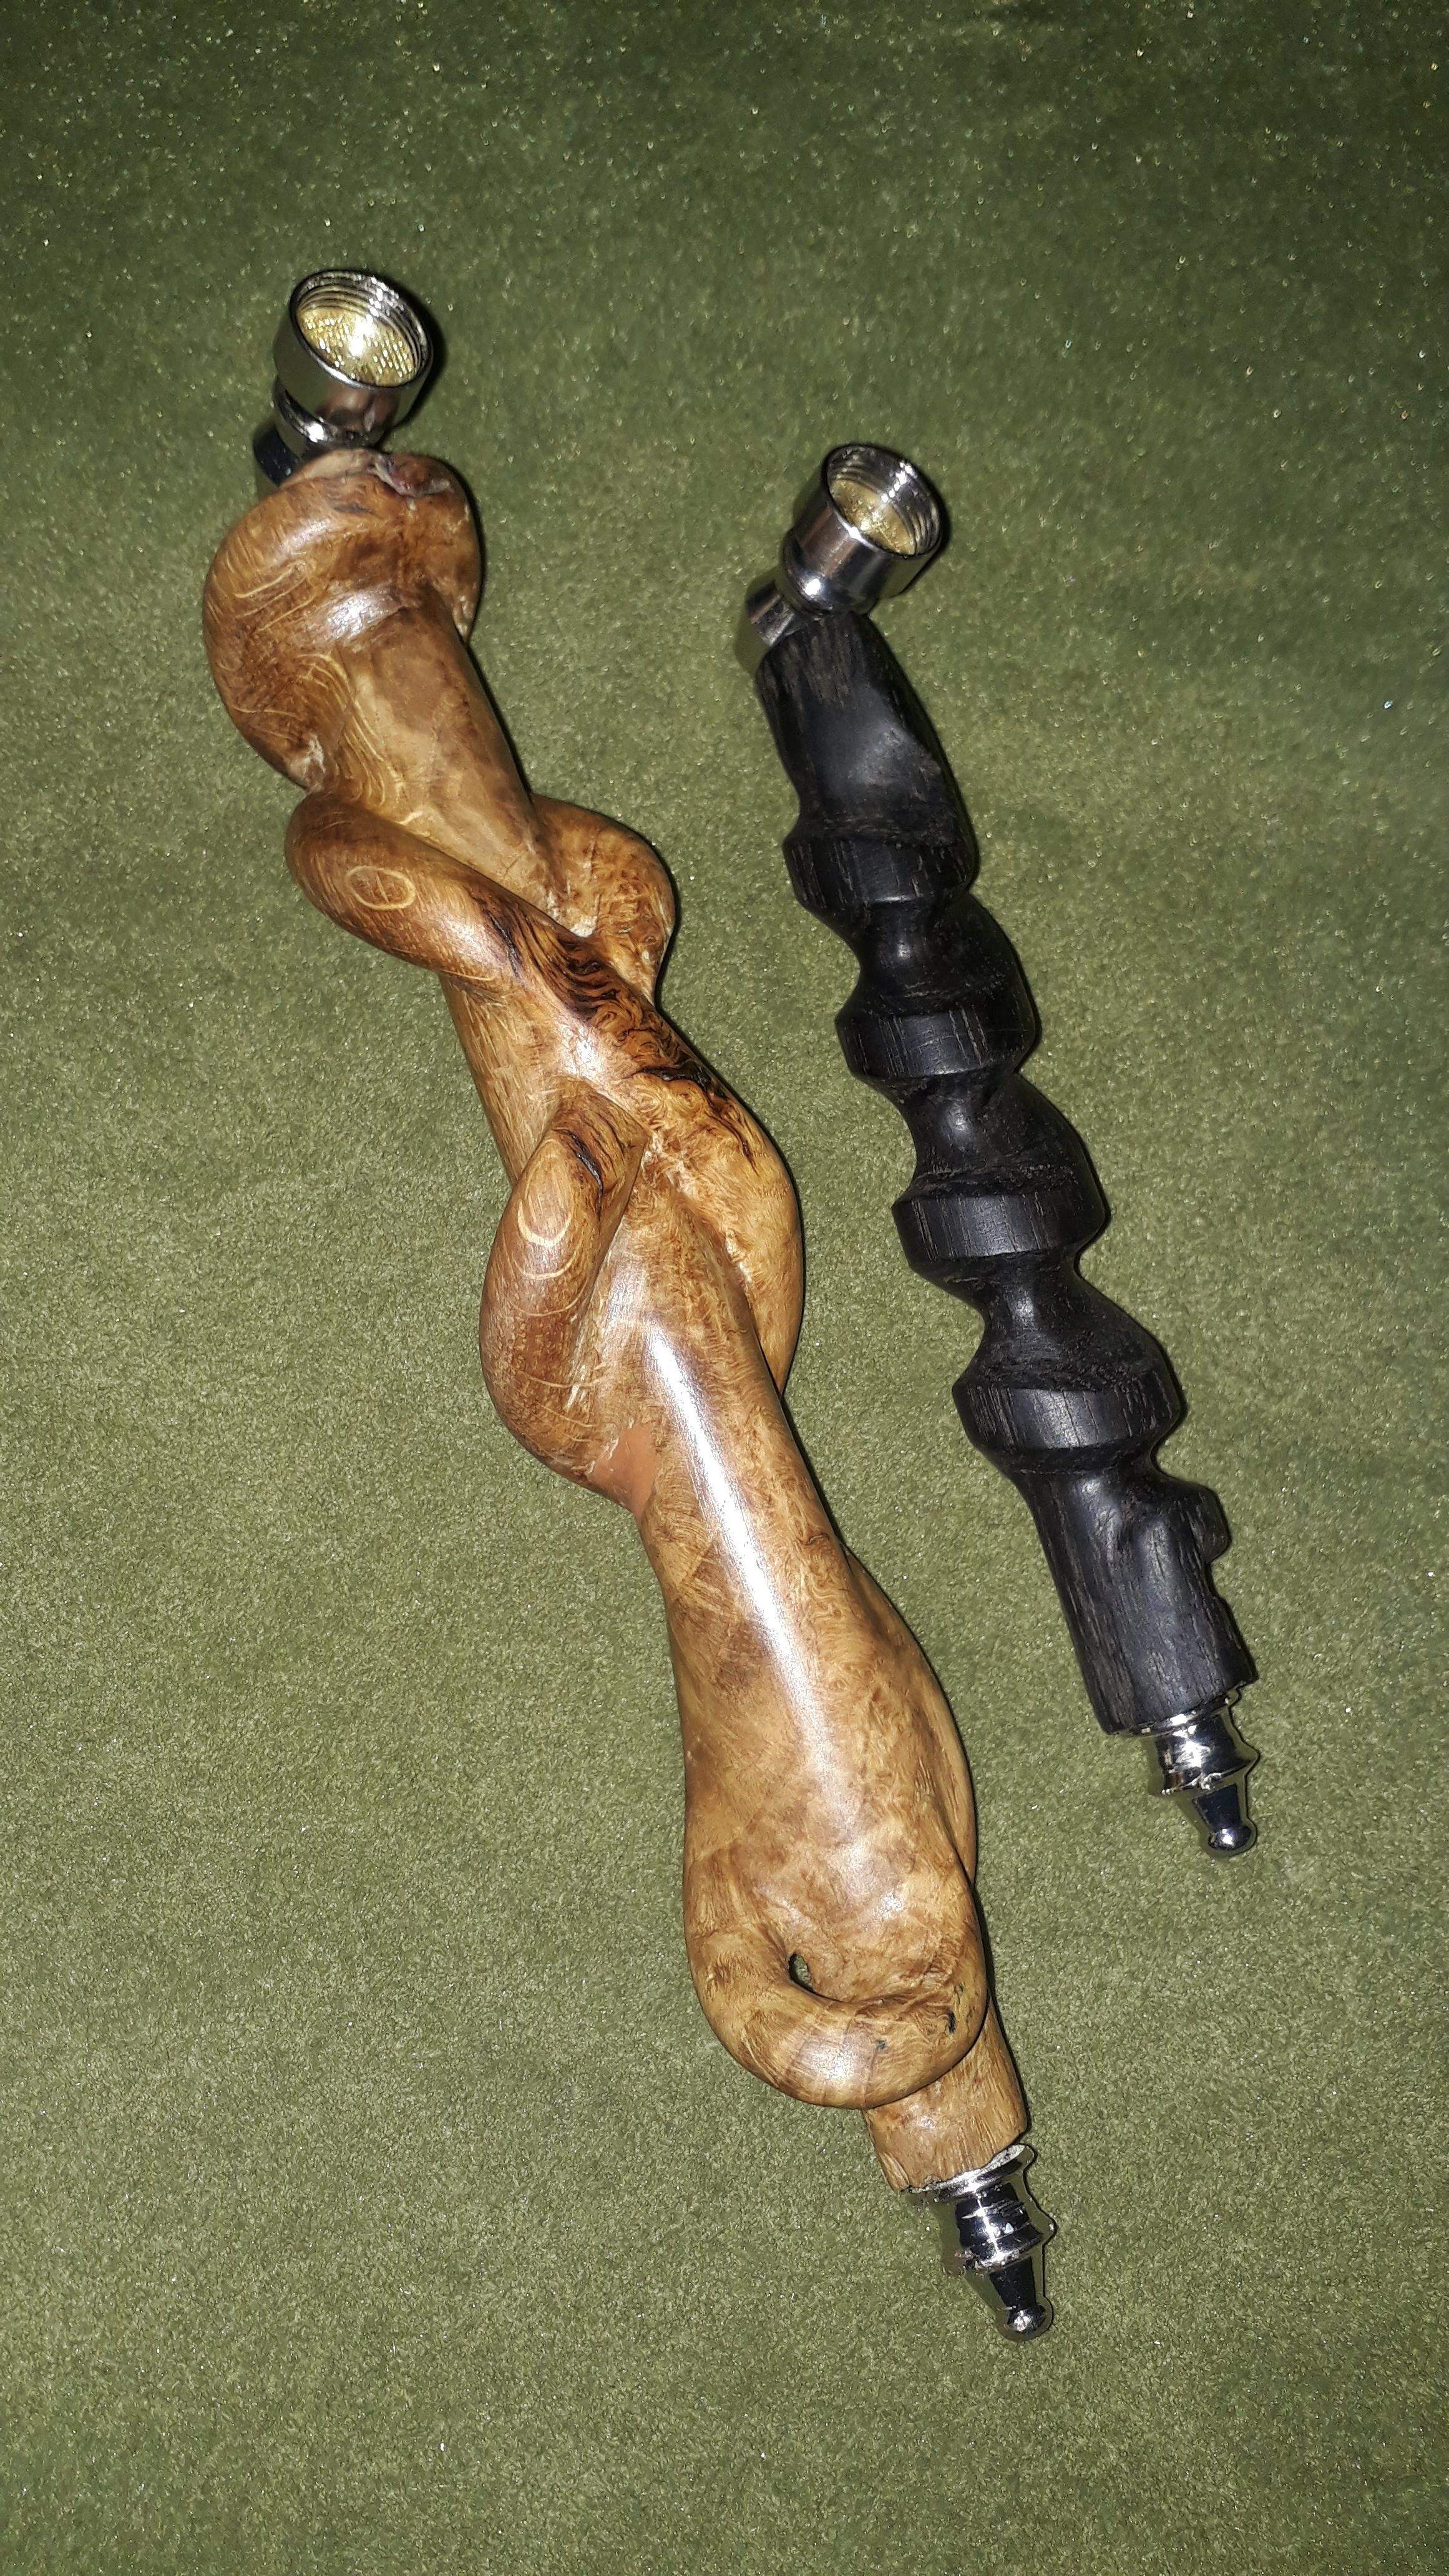 Oak twist and small bog oak screw